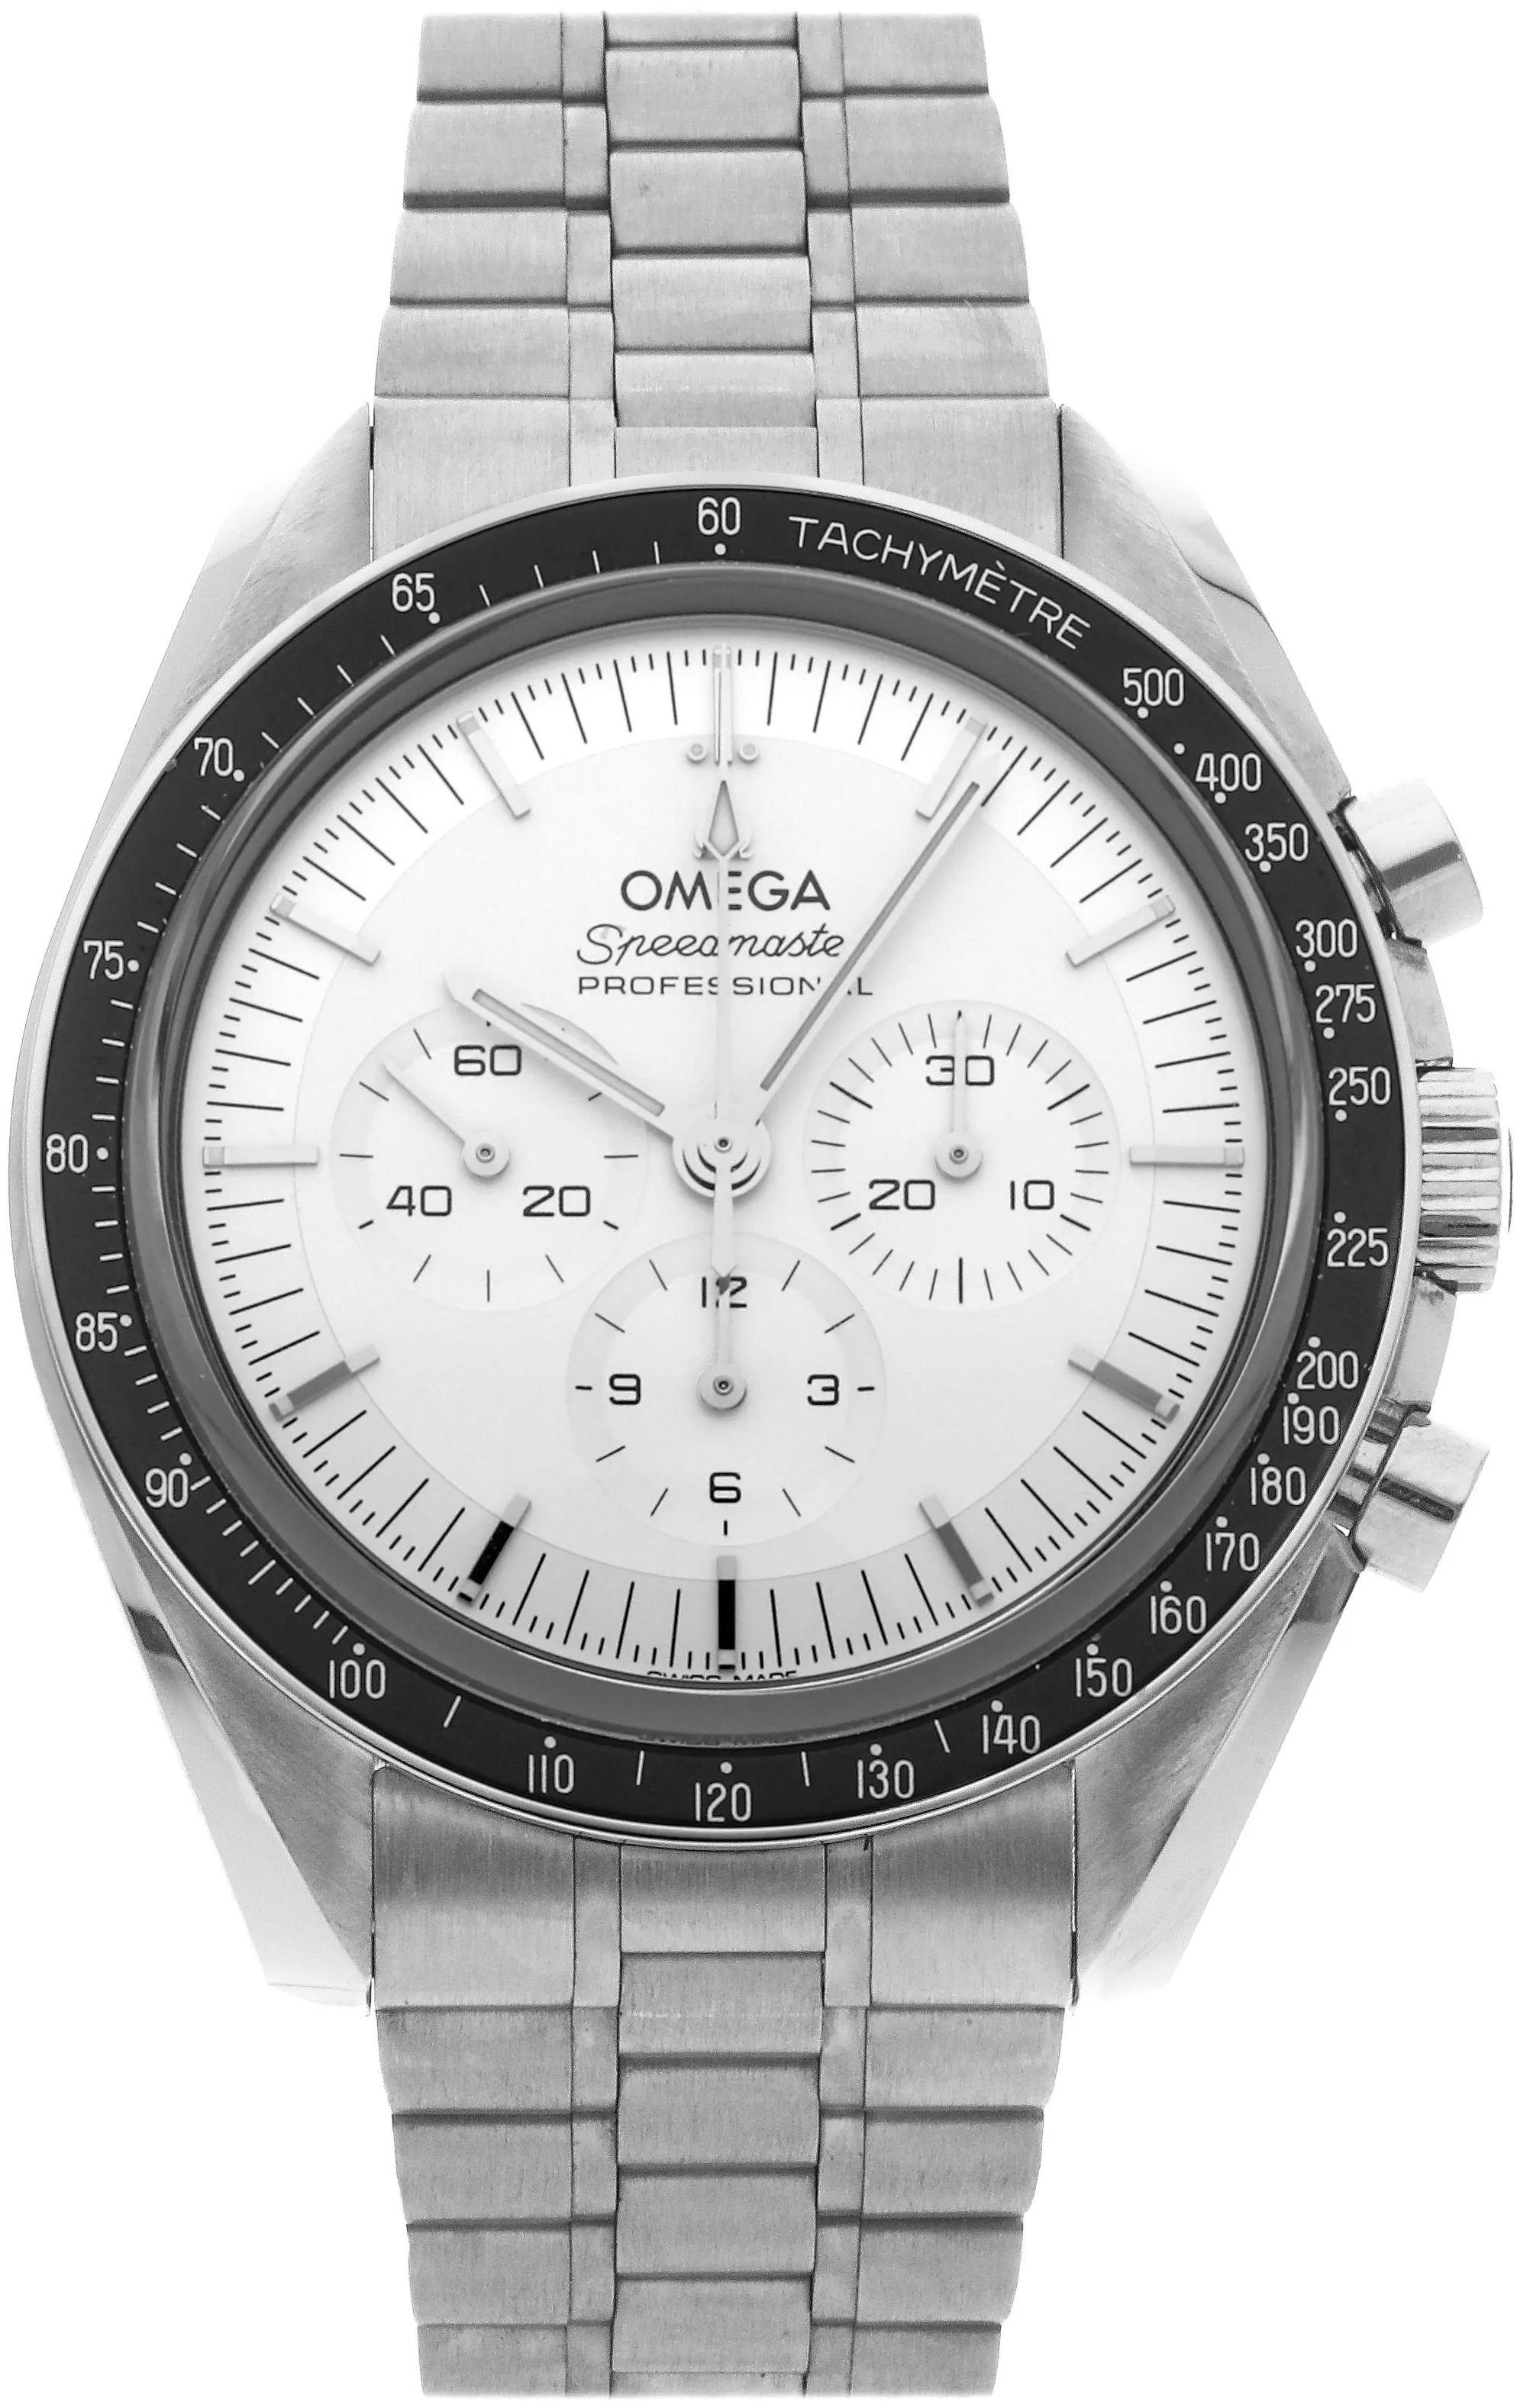 Omega Speedmaster Moon watch 310.60.42.50.02.001 42mm White gold Silver